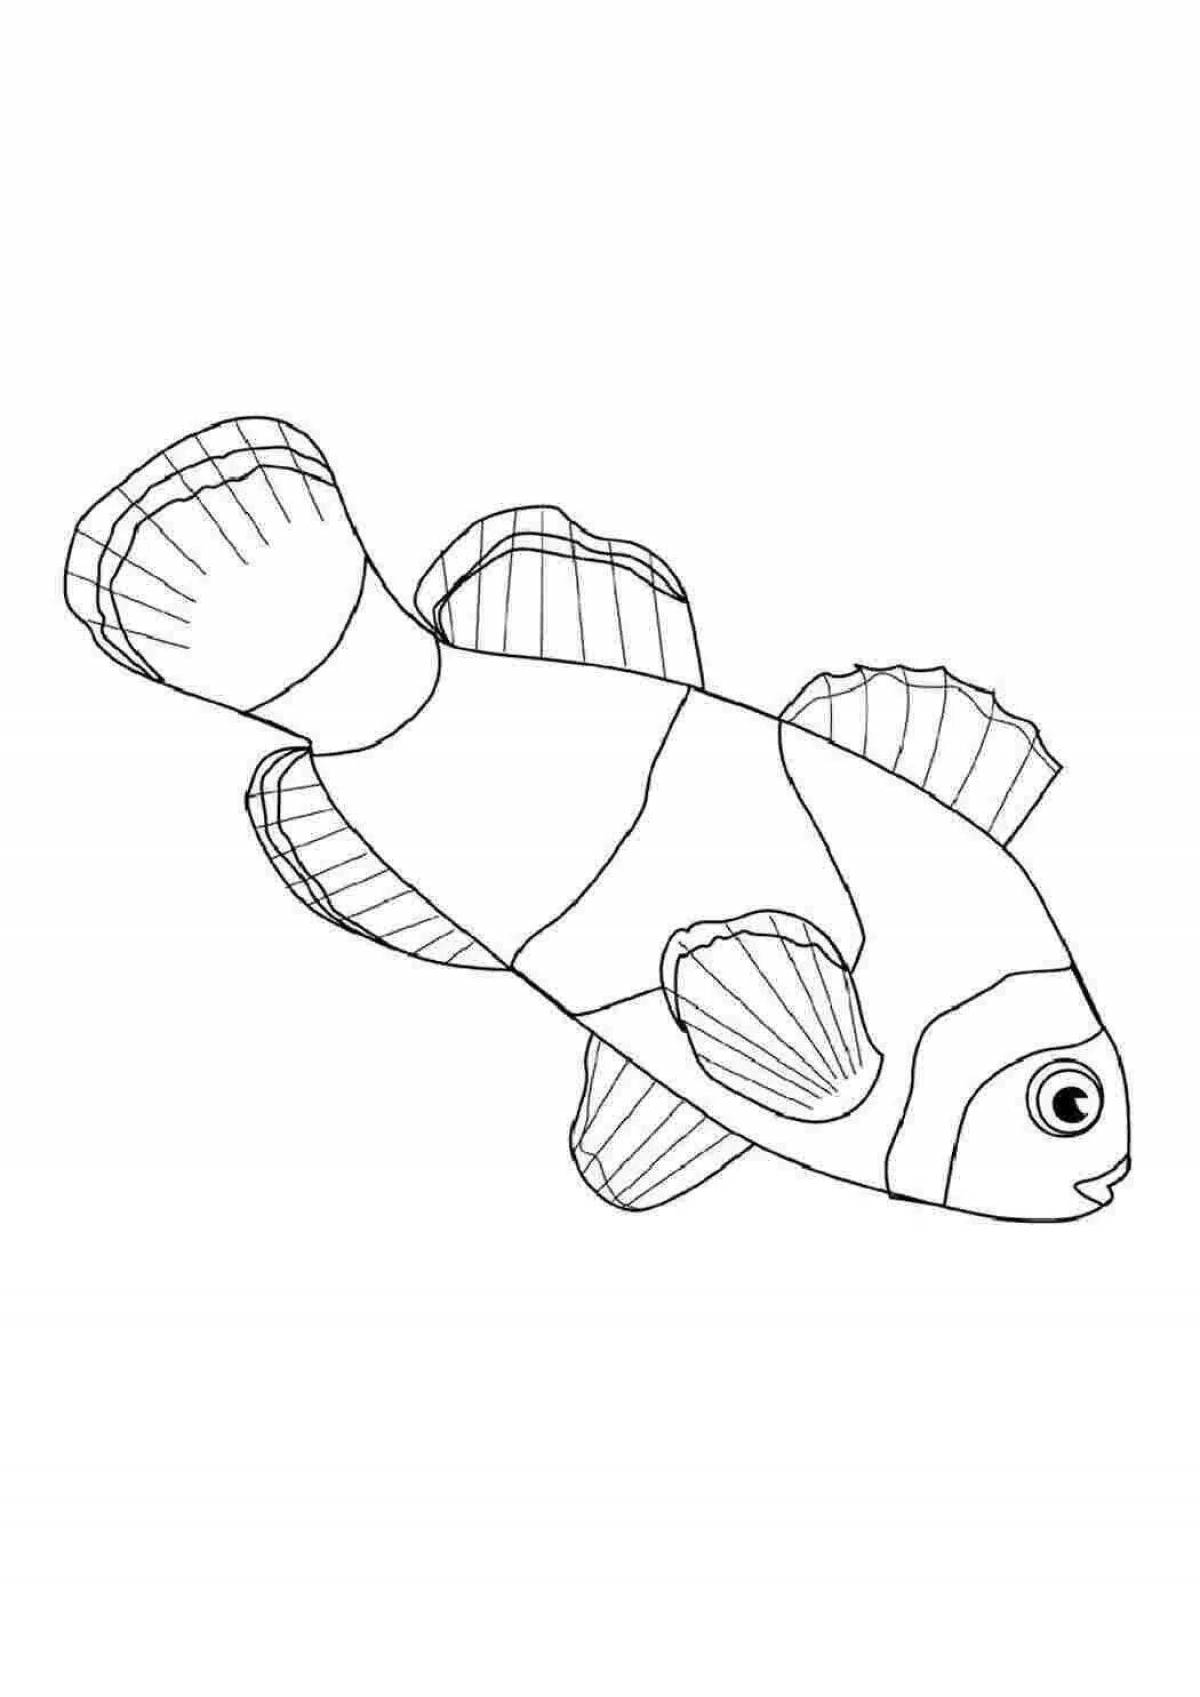 Раскраска симпатичная рыба-клоун для детей